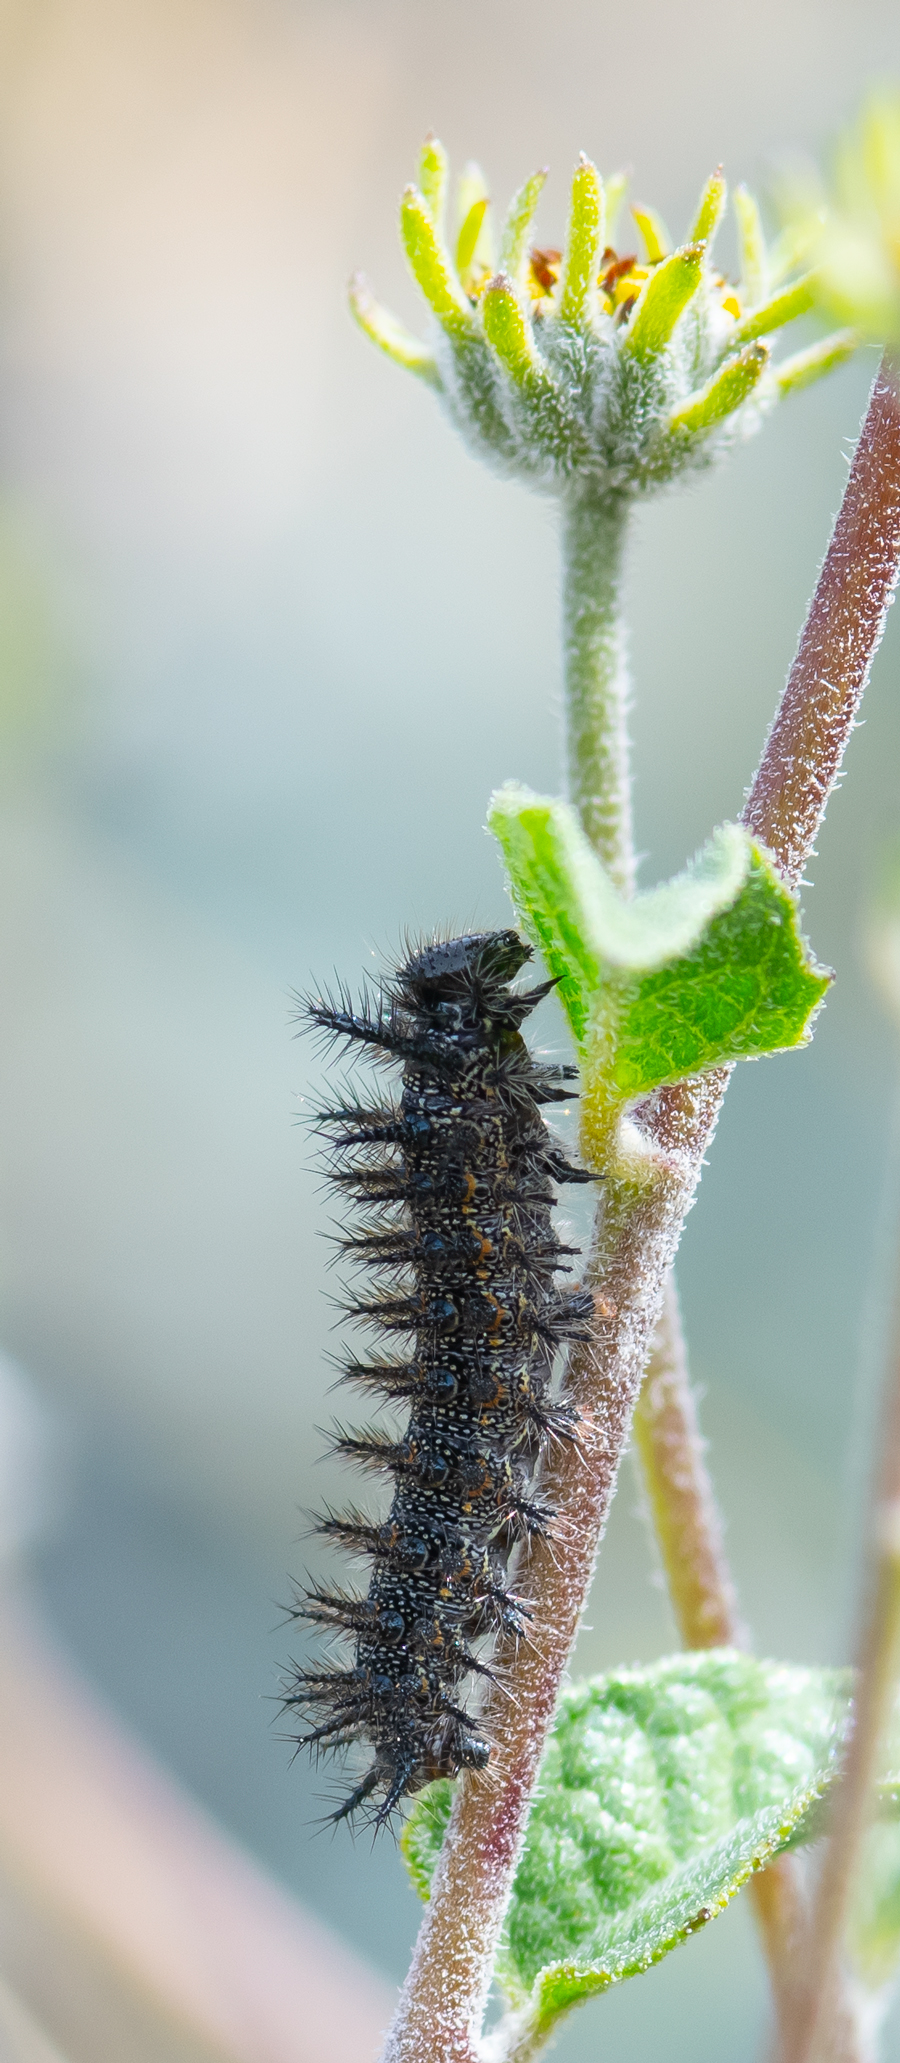 Caterpillar of the California Patch - Chlosyne californica